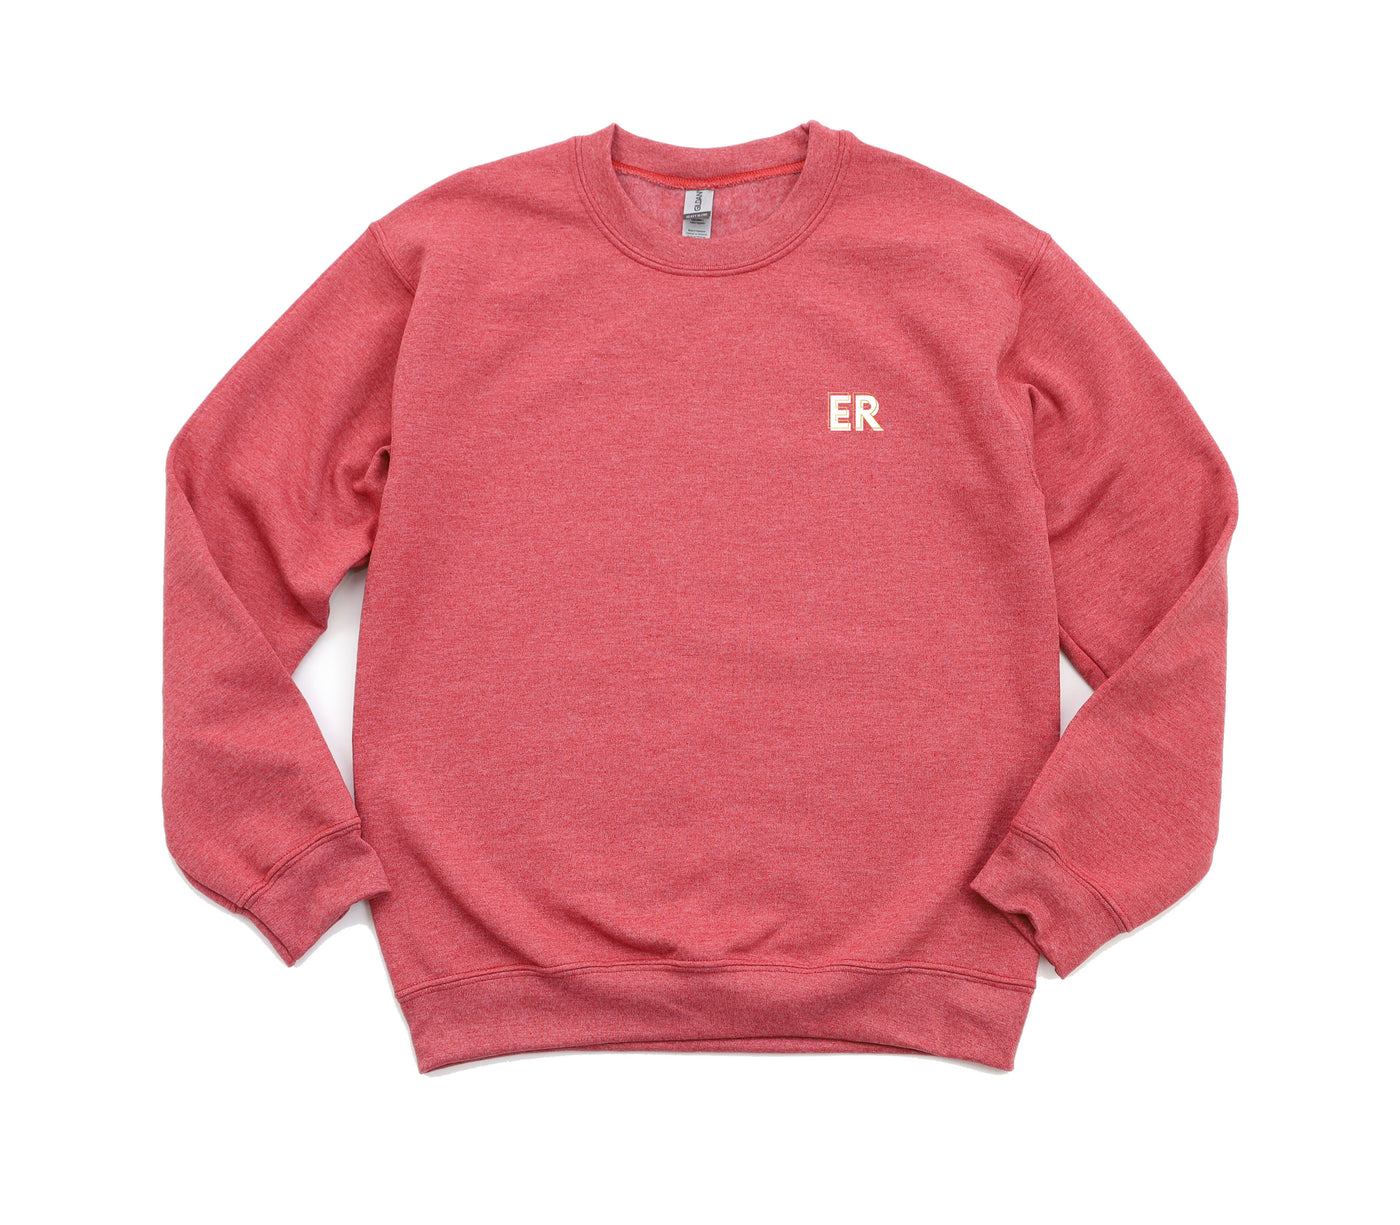 ER Creds - Non-Pocketed Crew Sweatshirt